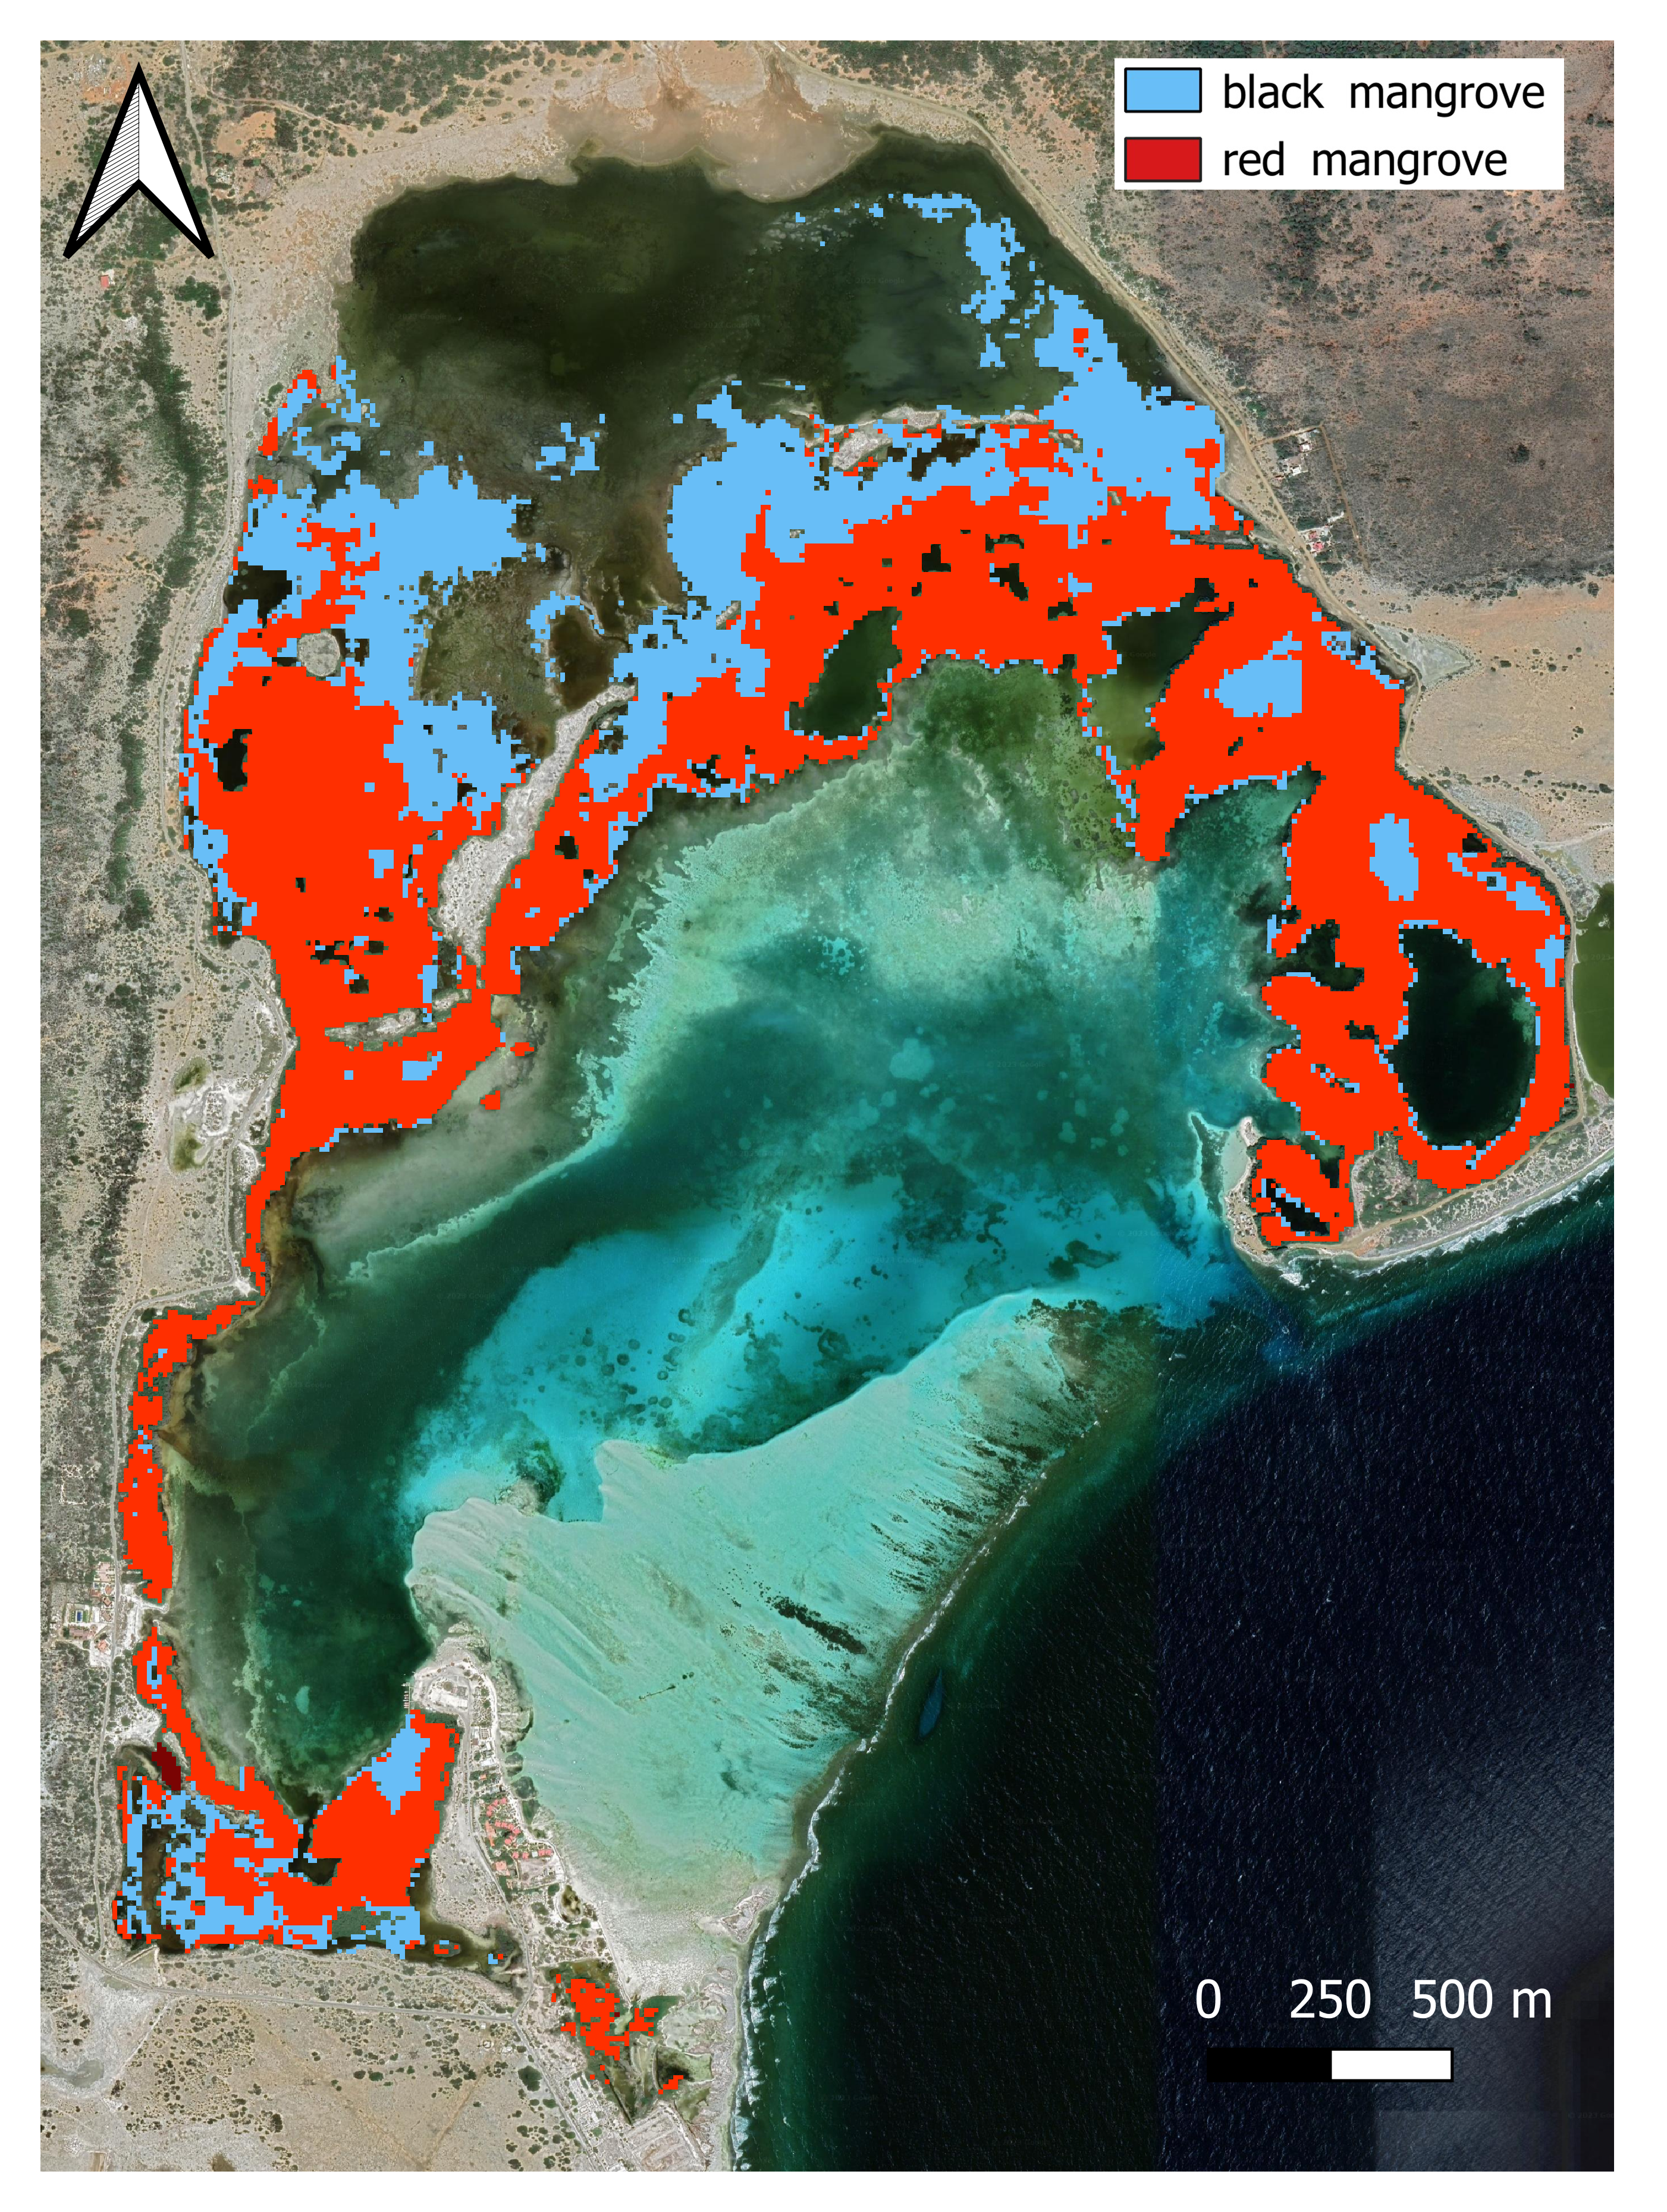 Distribution of the black mangrove